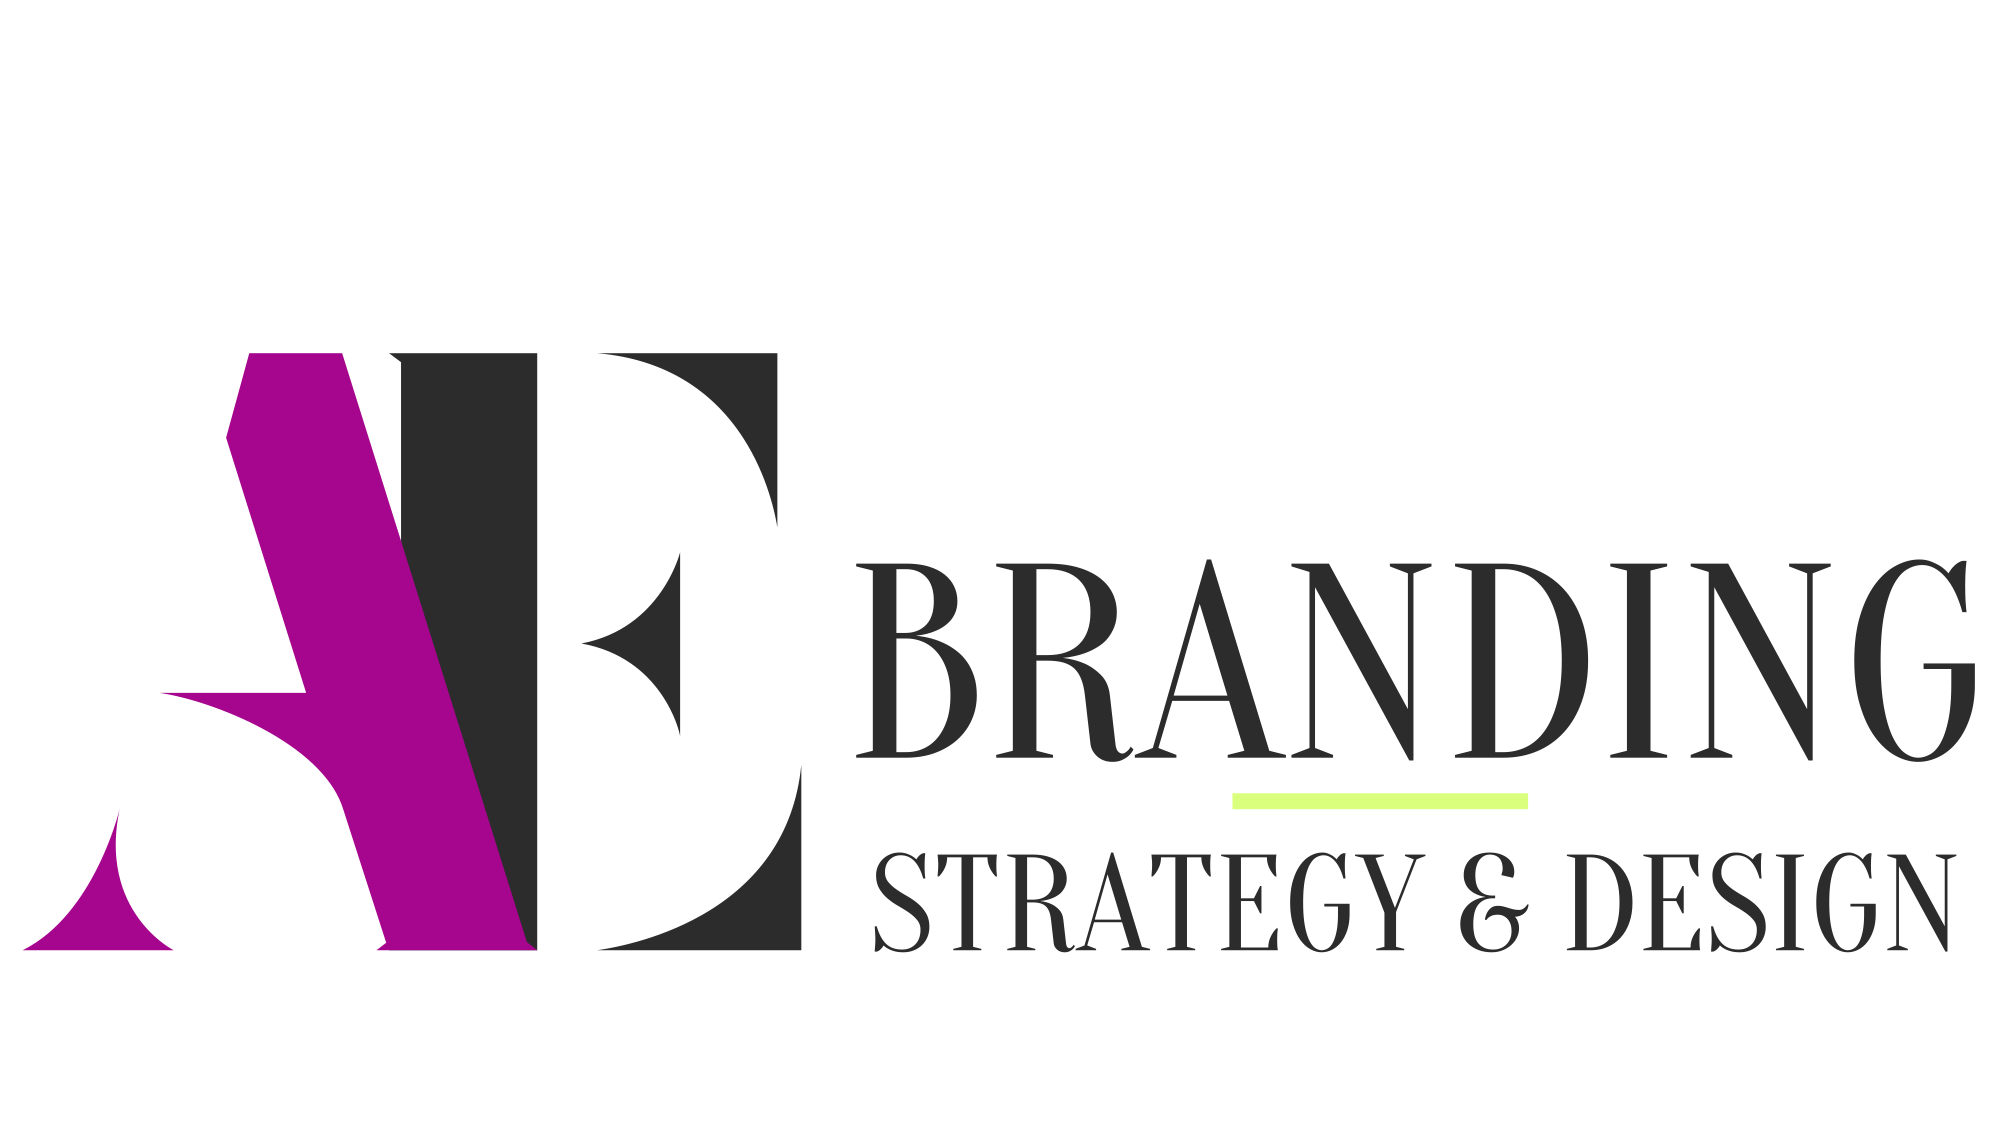 AE Branding | Strategy & Design logo